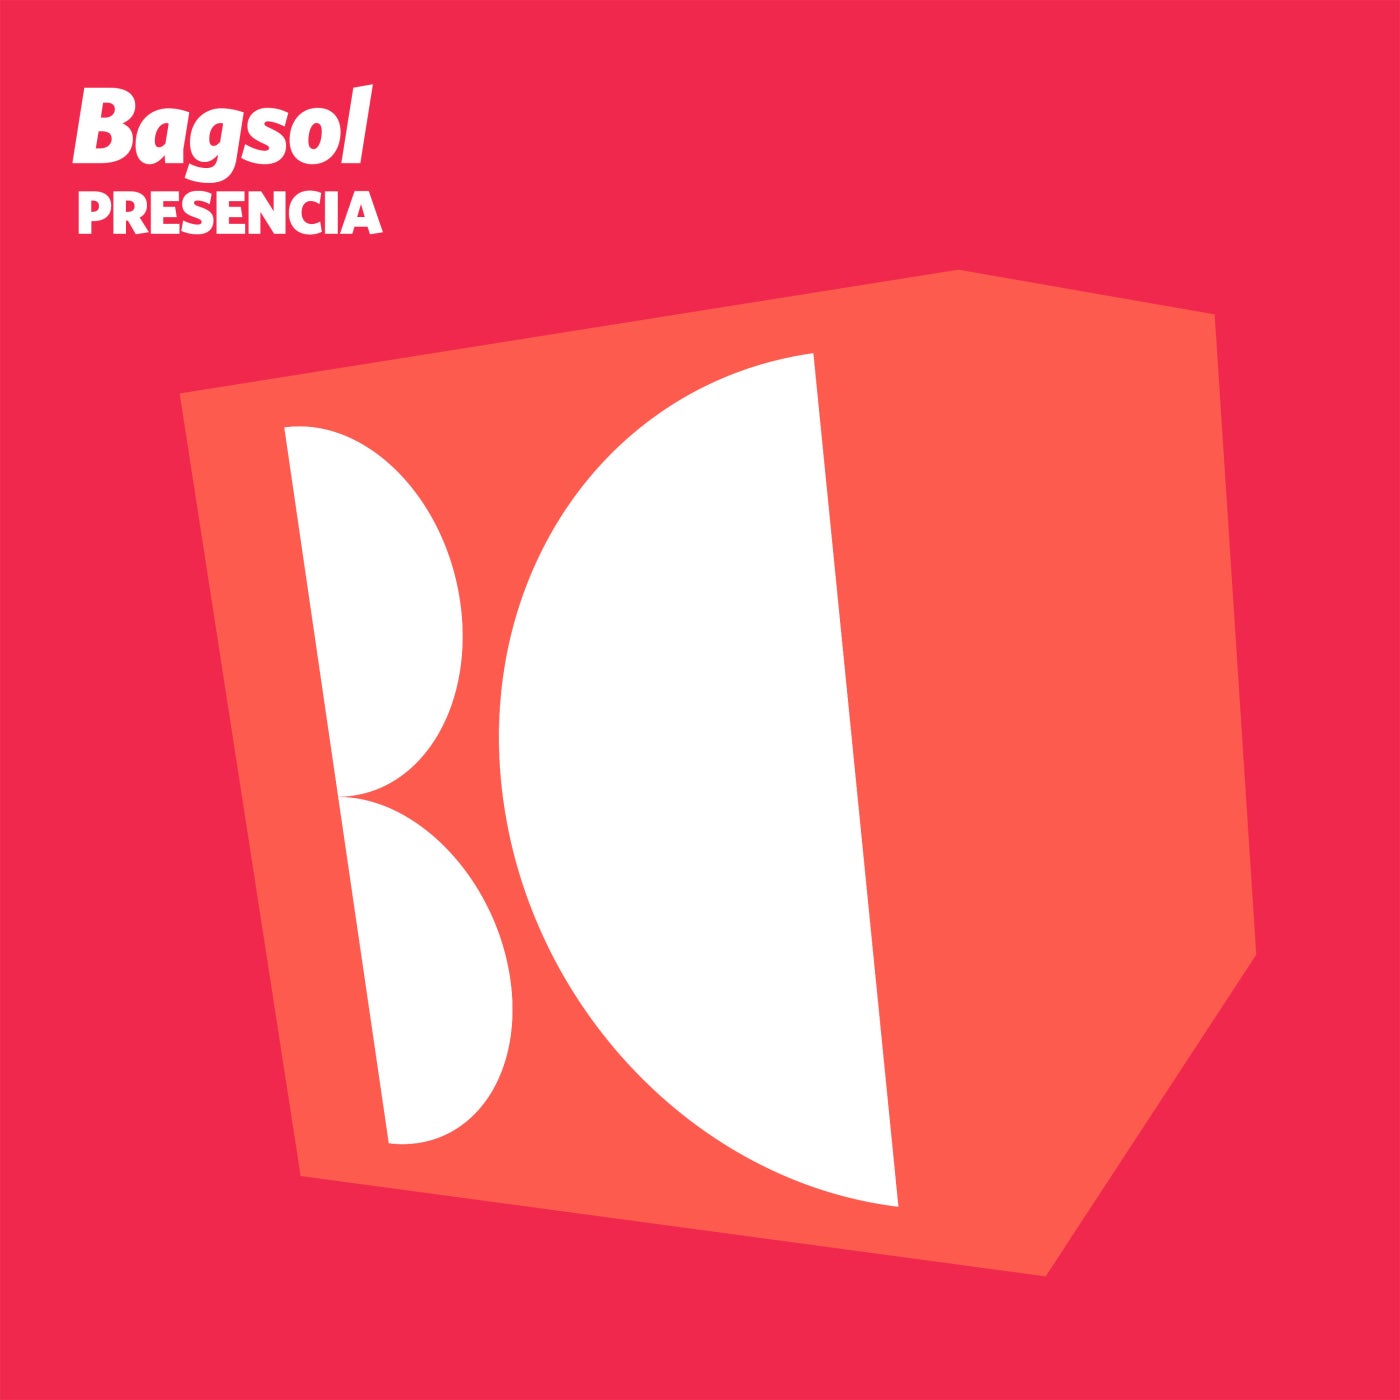 Bagsol – Presencia [BALKAN0754]